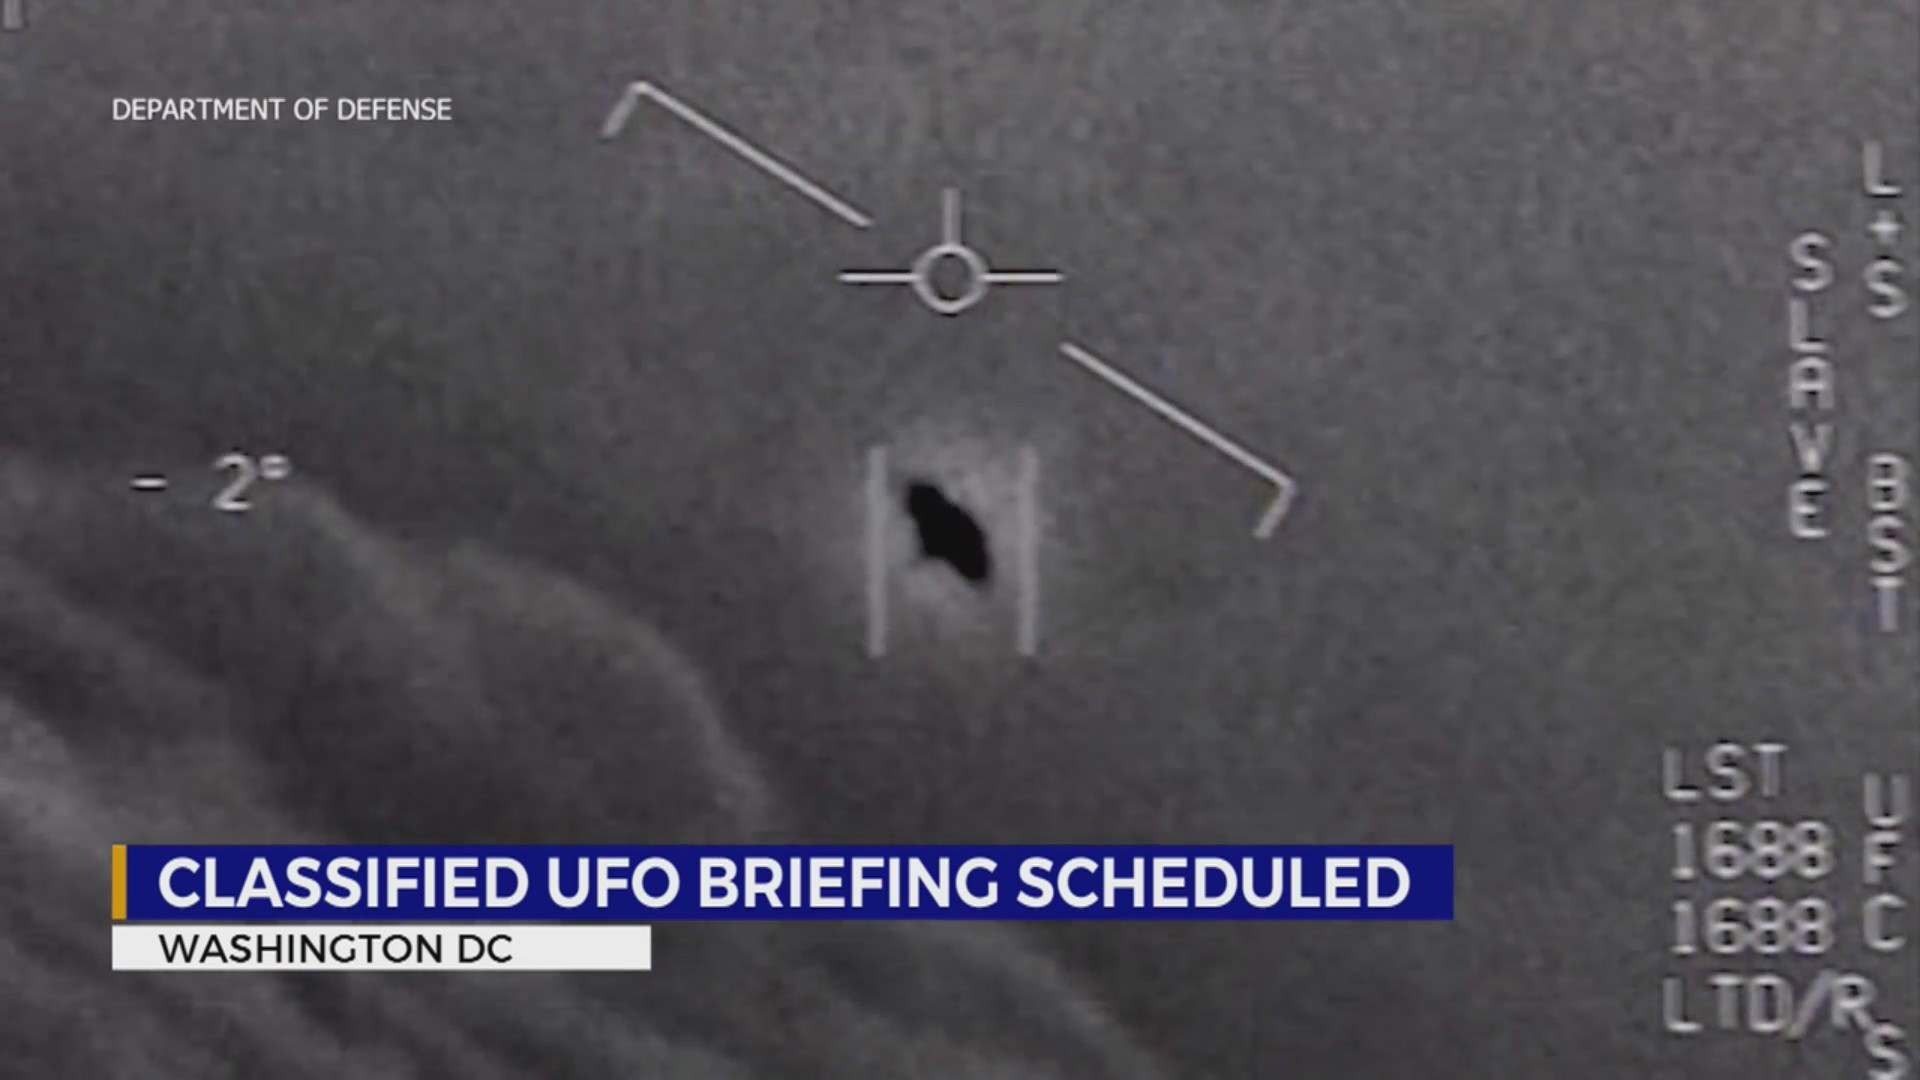 Classified UFO briefing scheduled